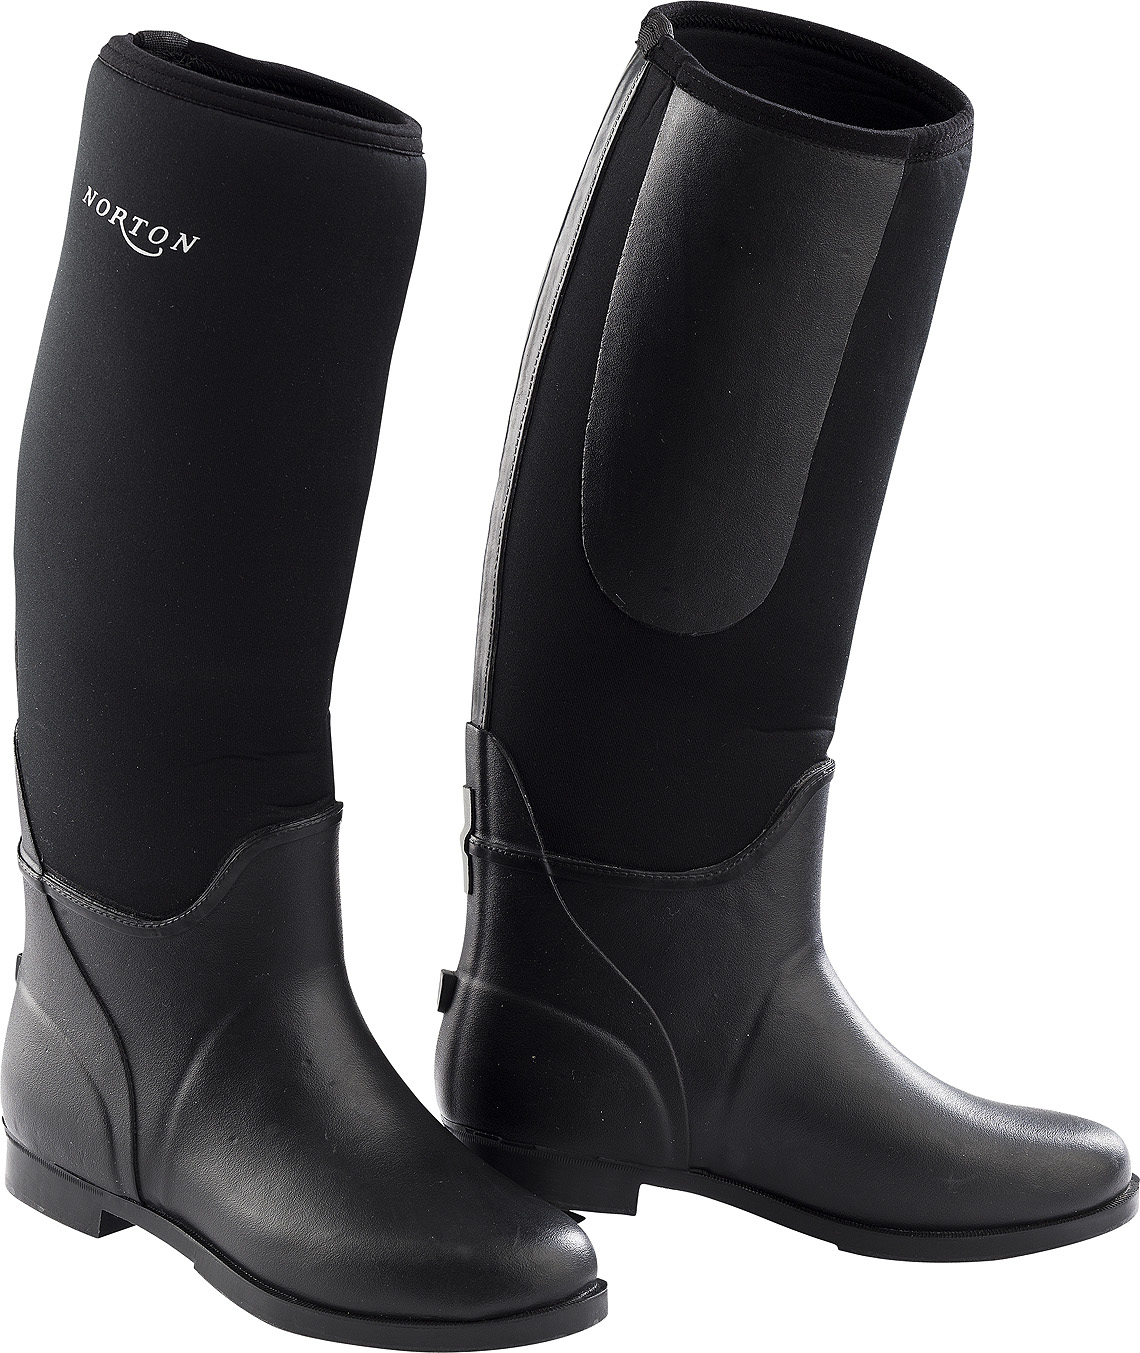 Norton Neoprene boots - long leather 